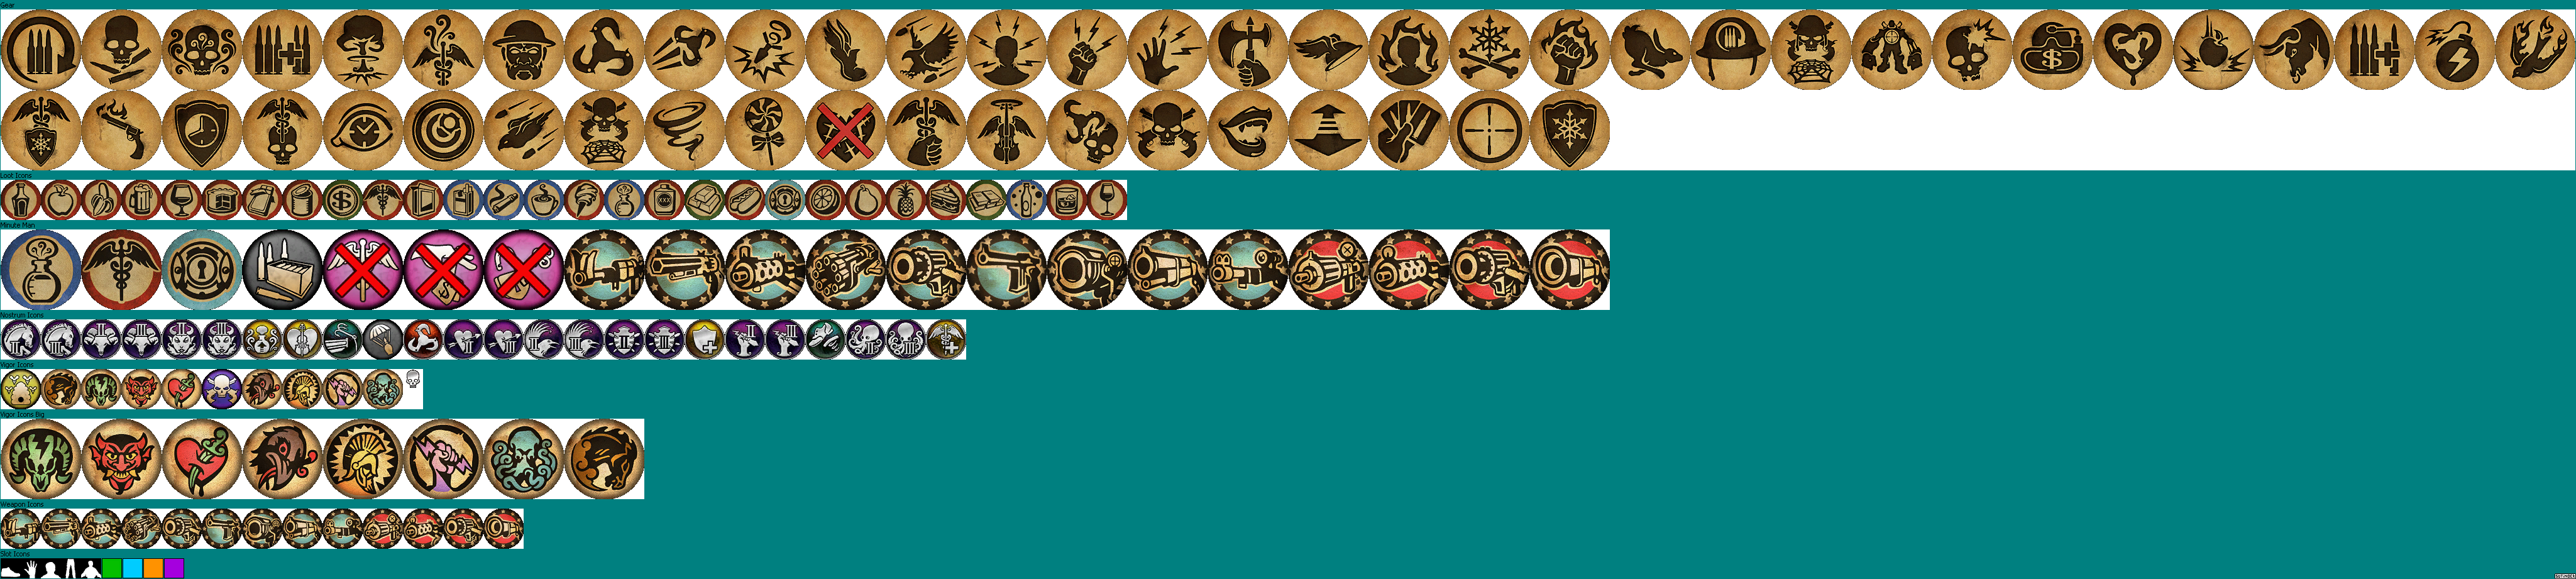 BioShock: Infinite - Miscellaneous Icons